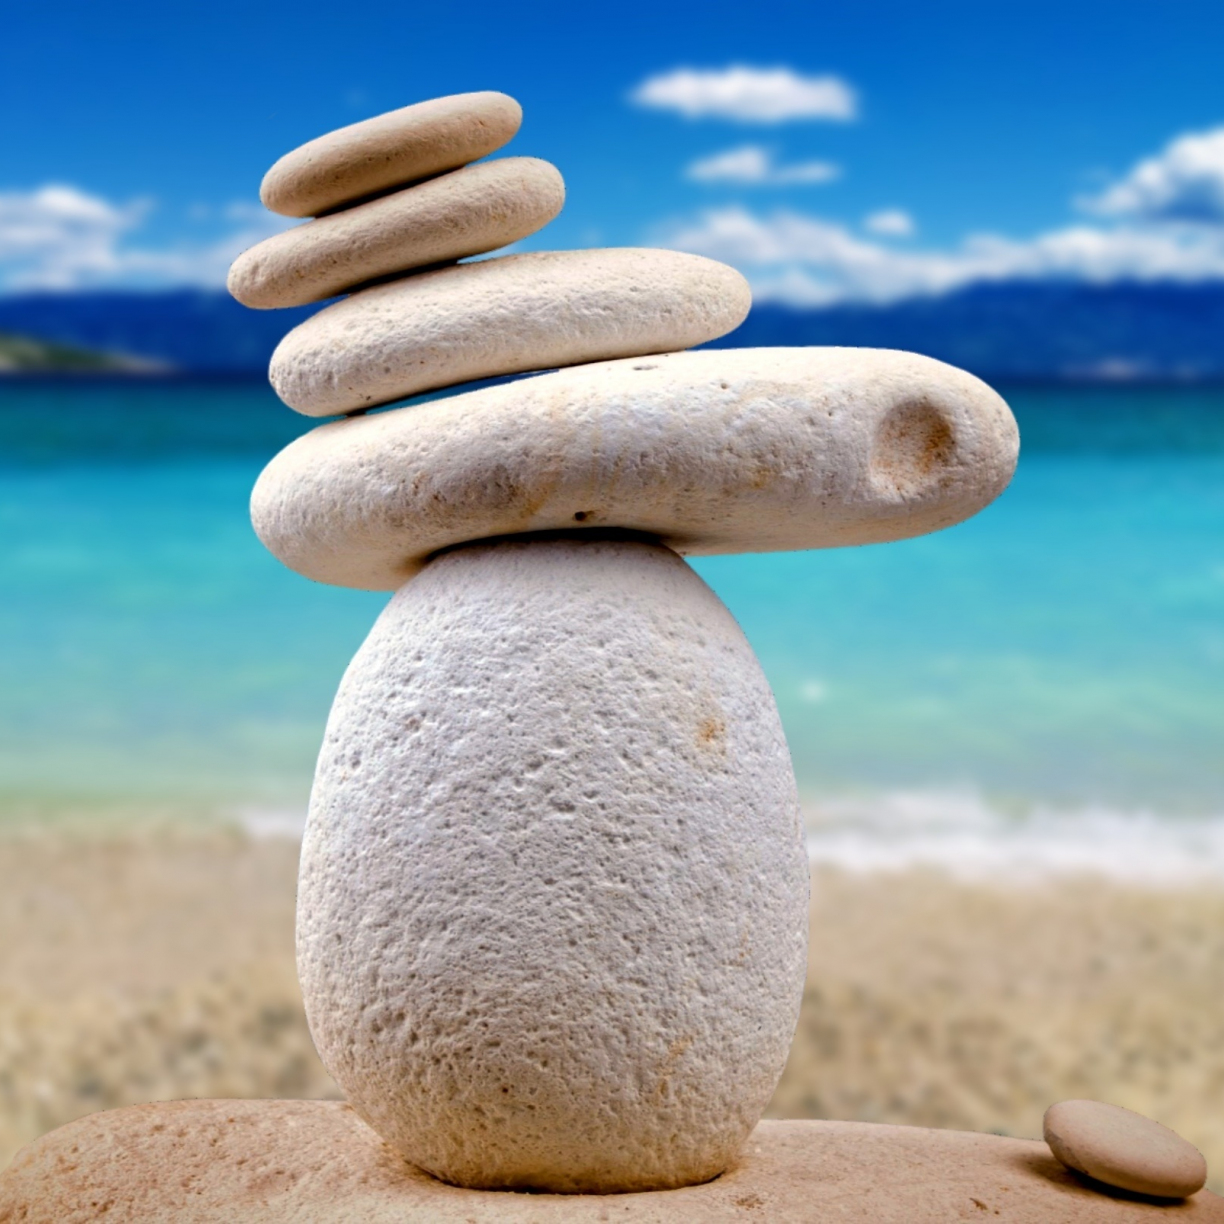 stones_balance_zen_calm.jpg